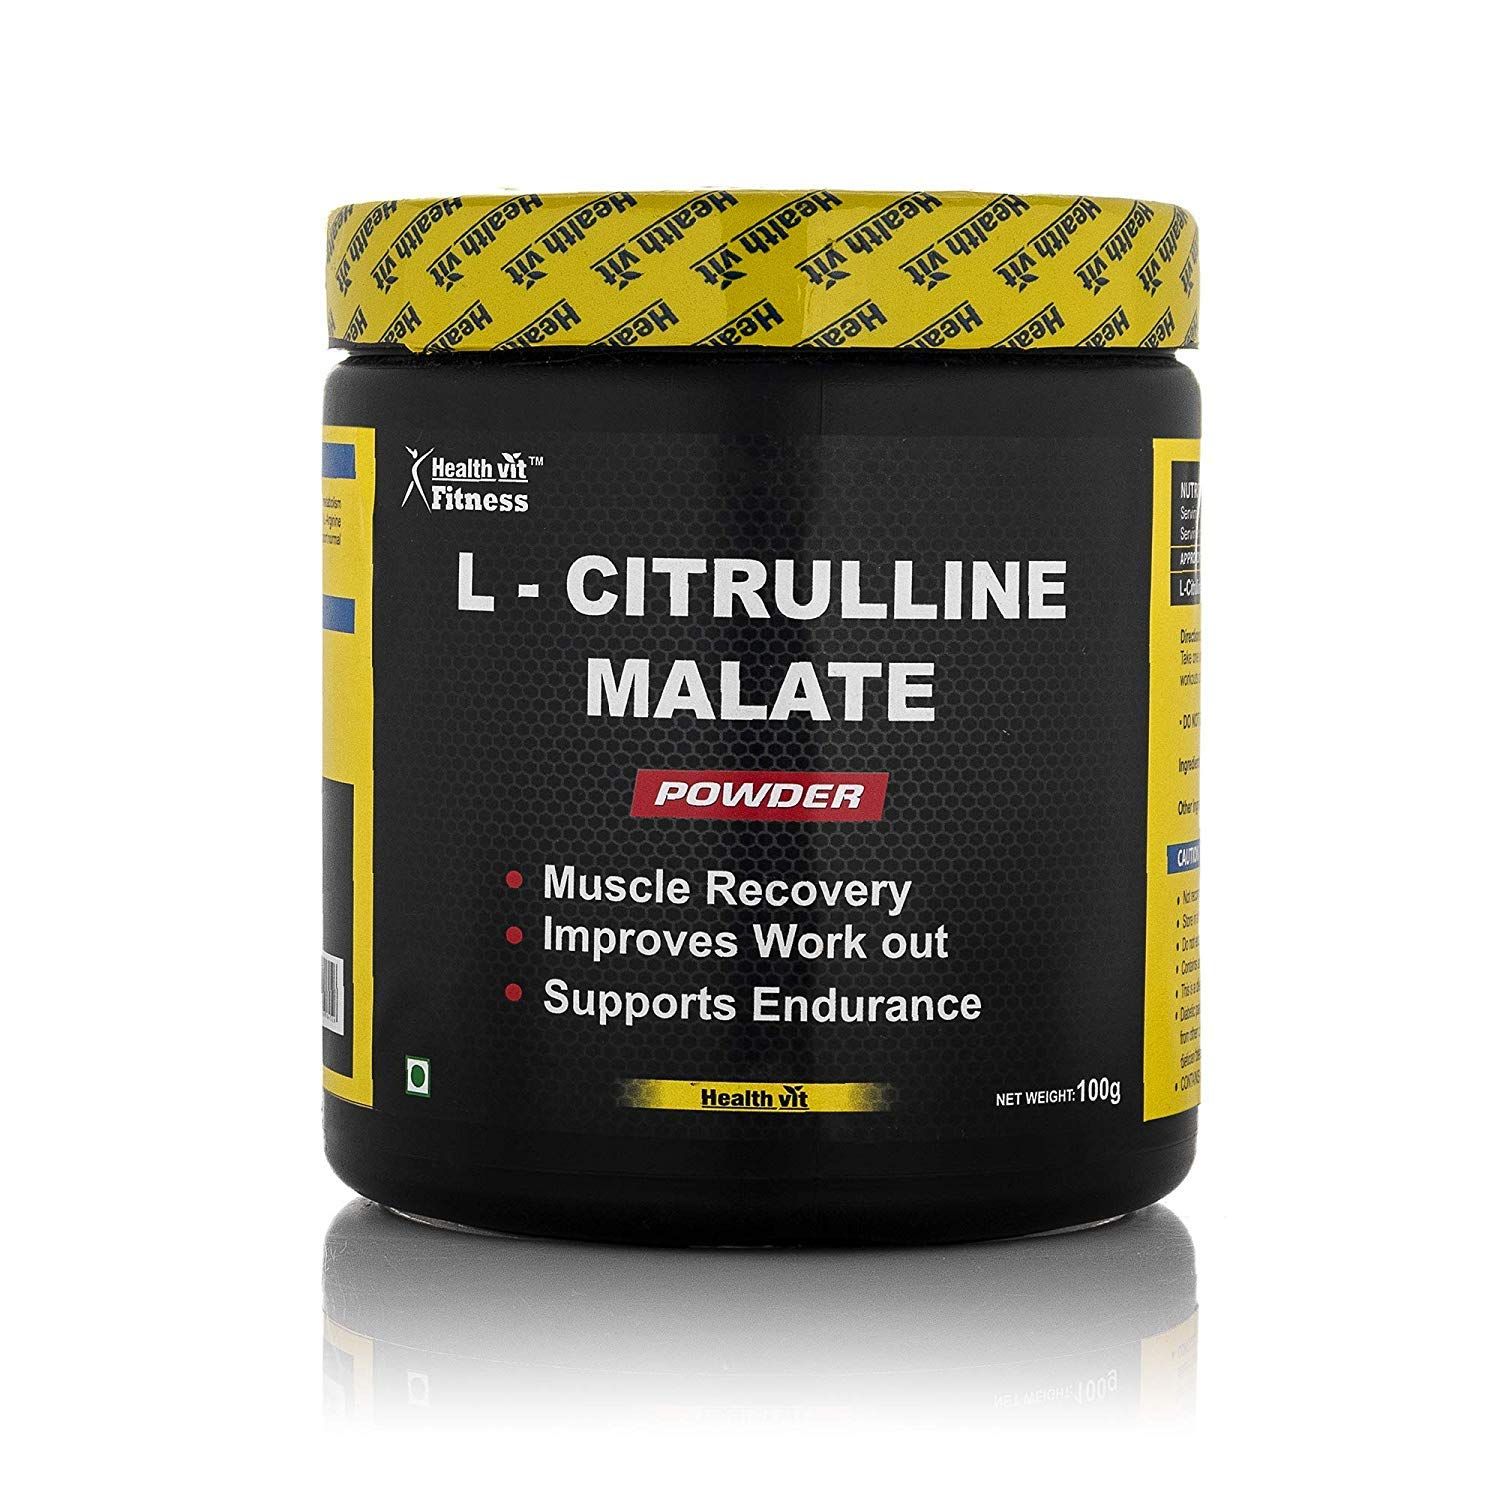 HealthVit Fitness Pure L Citrulline Malate Powder Image